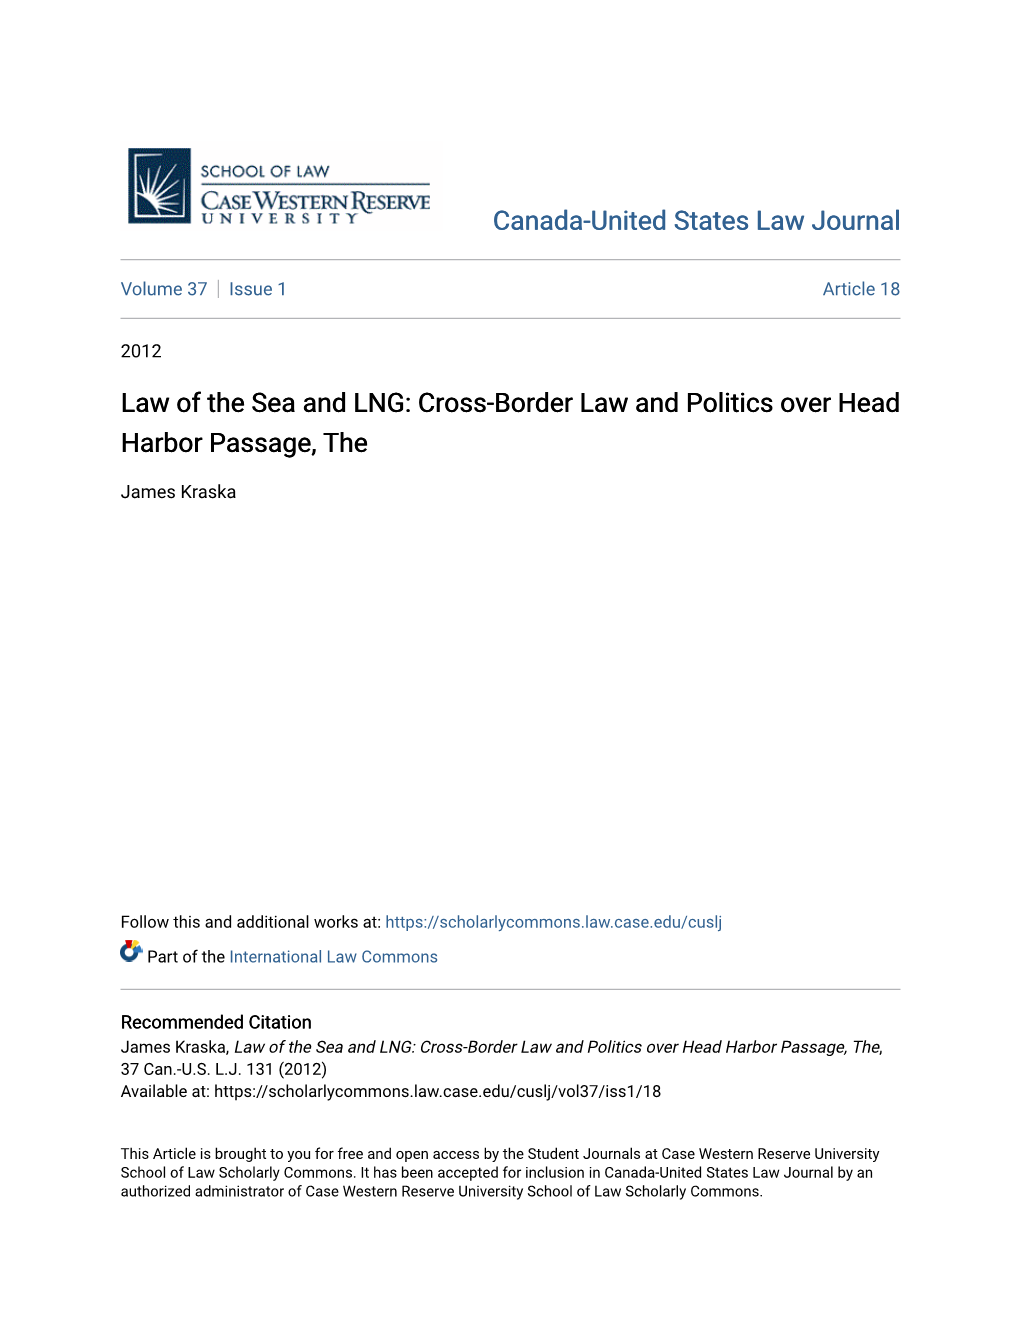 Cross-Border Law and Politics Over Head Harbor Passage, The